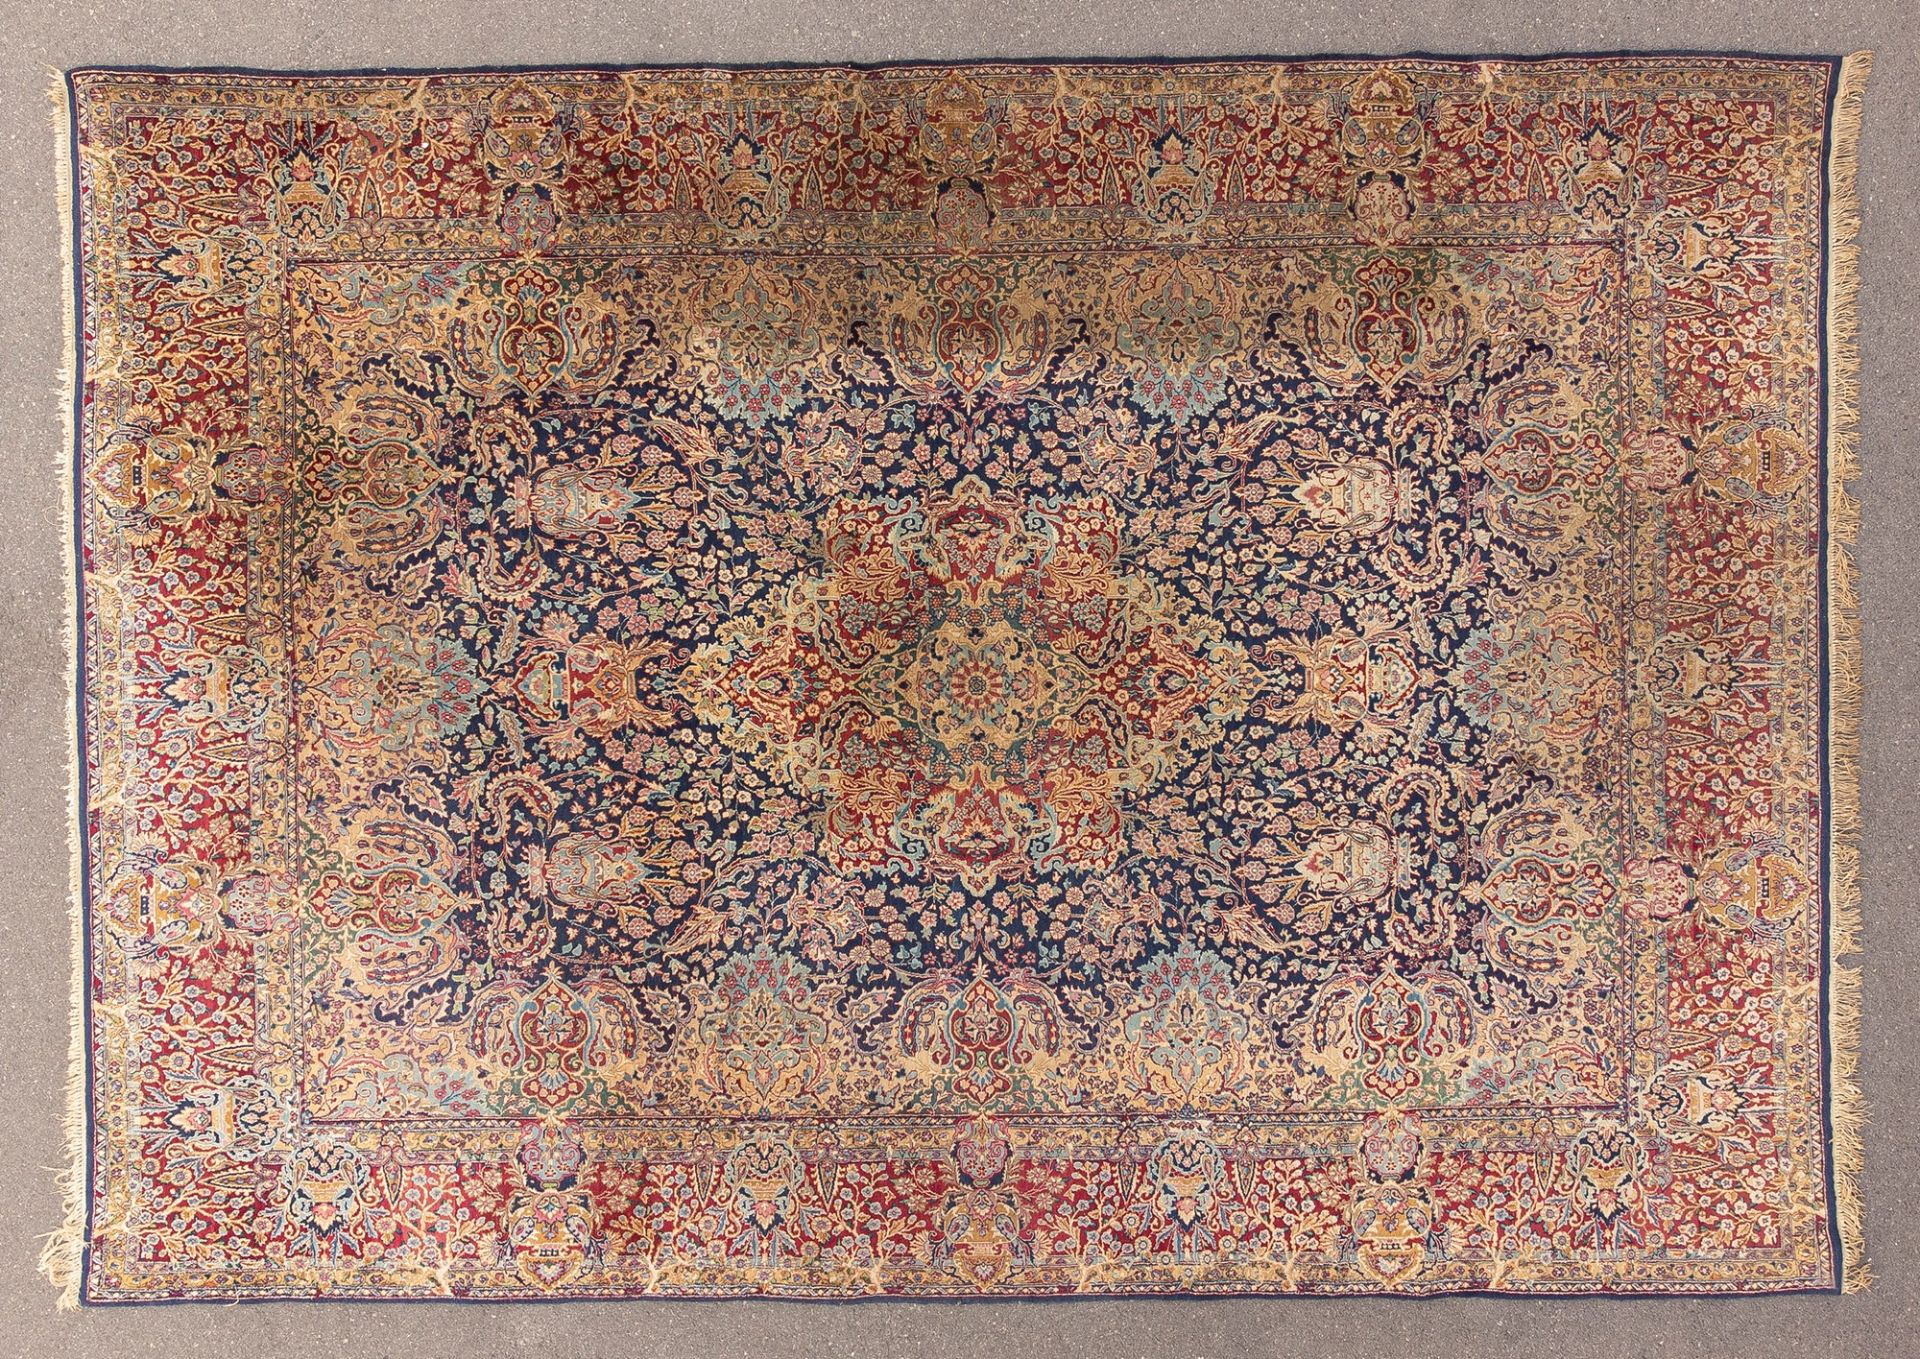 Very fine Persian Kirman carpet